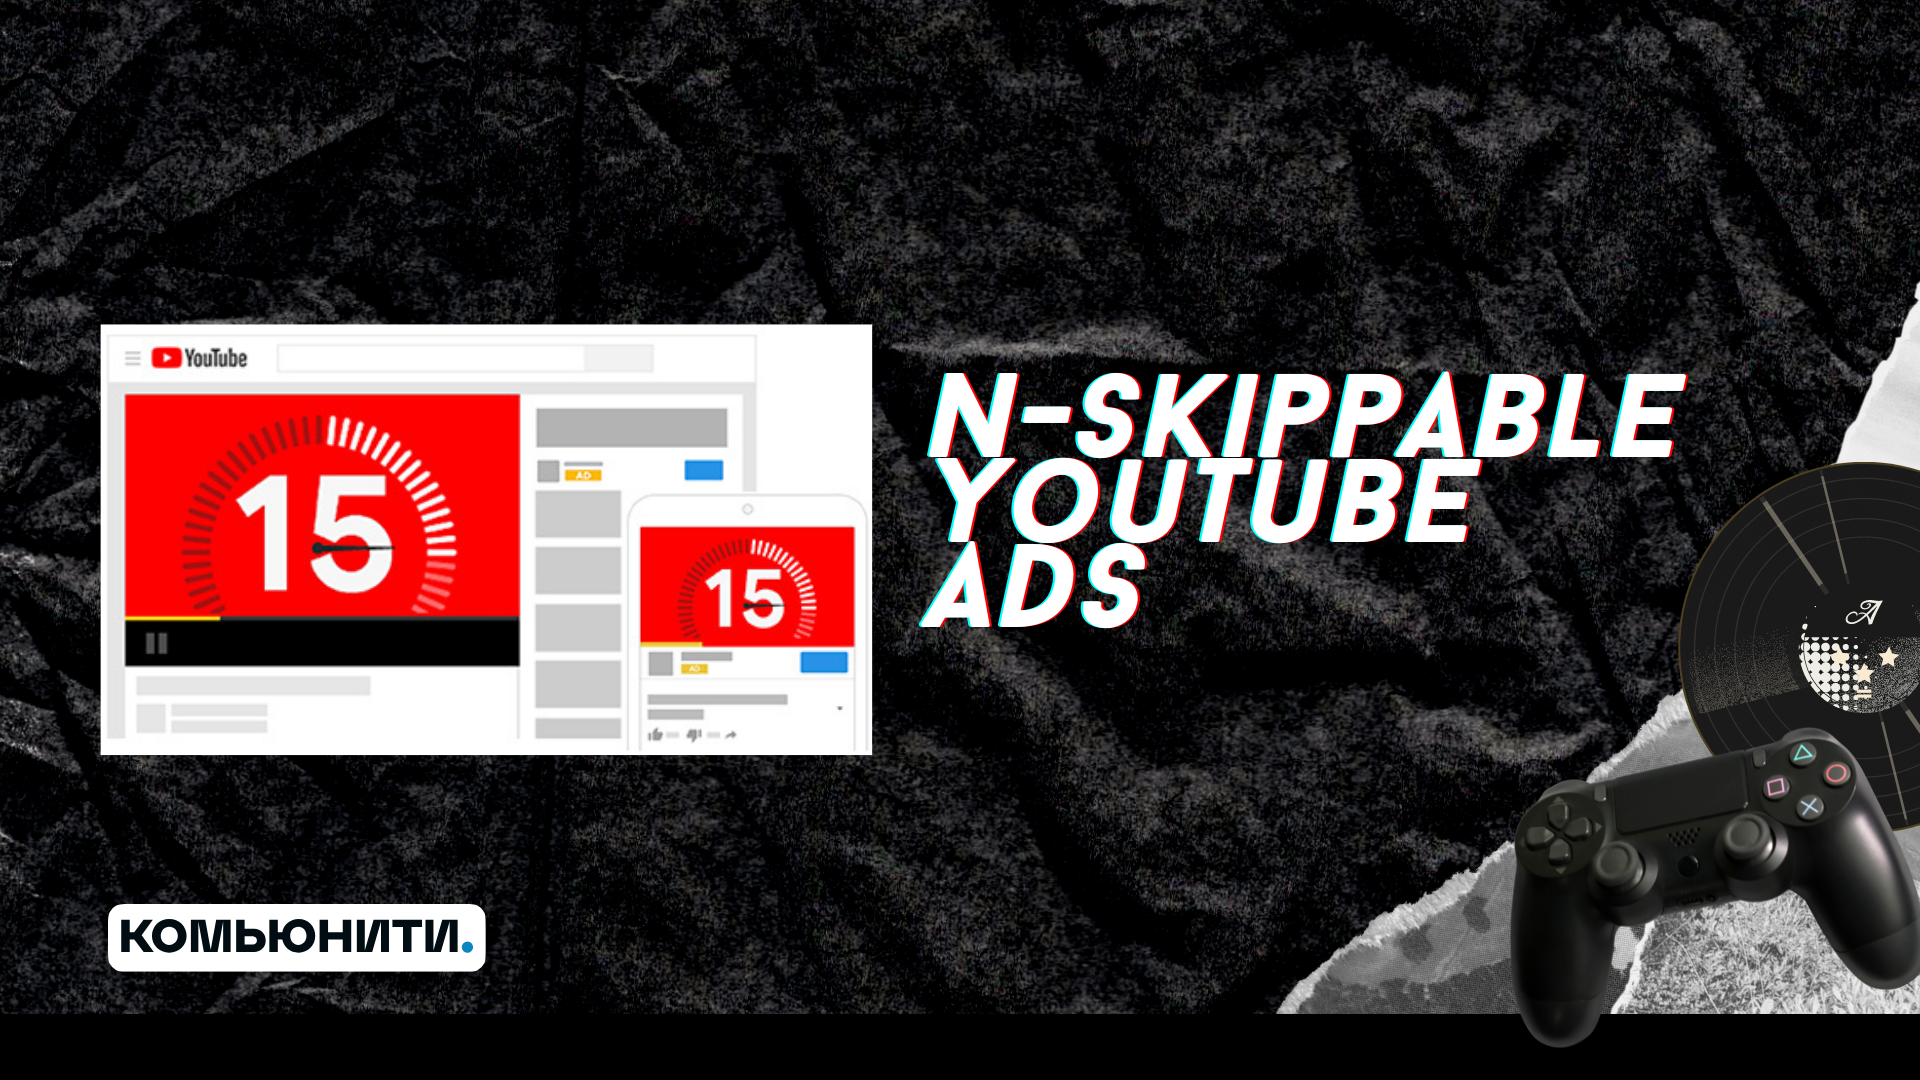 Non skippable youtube ads